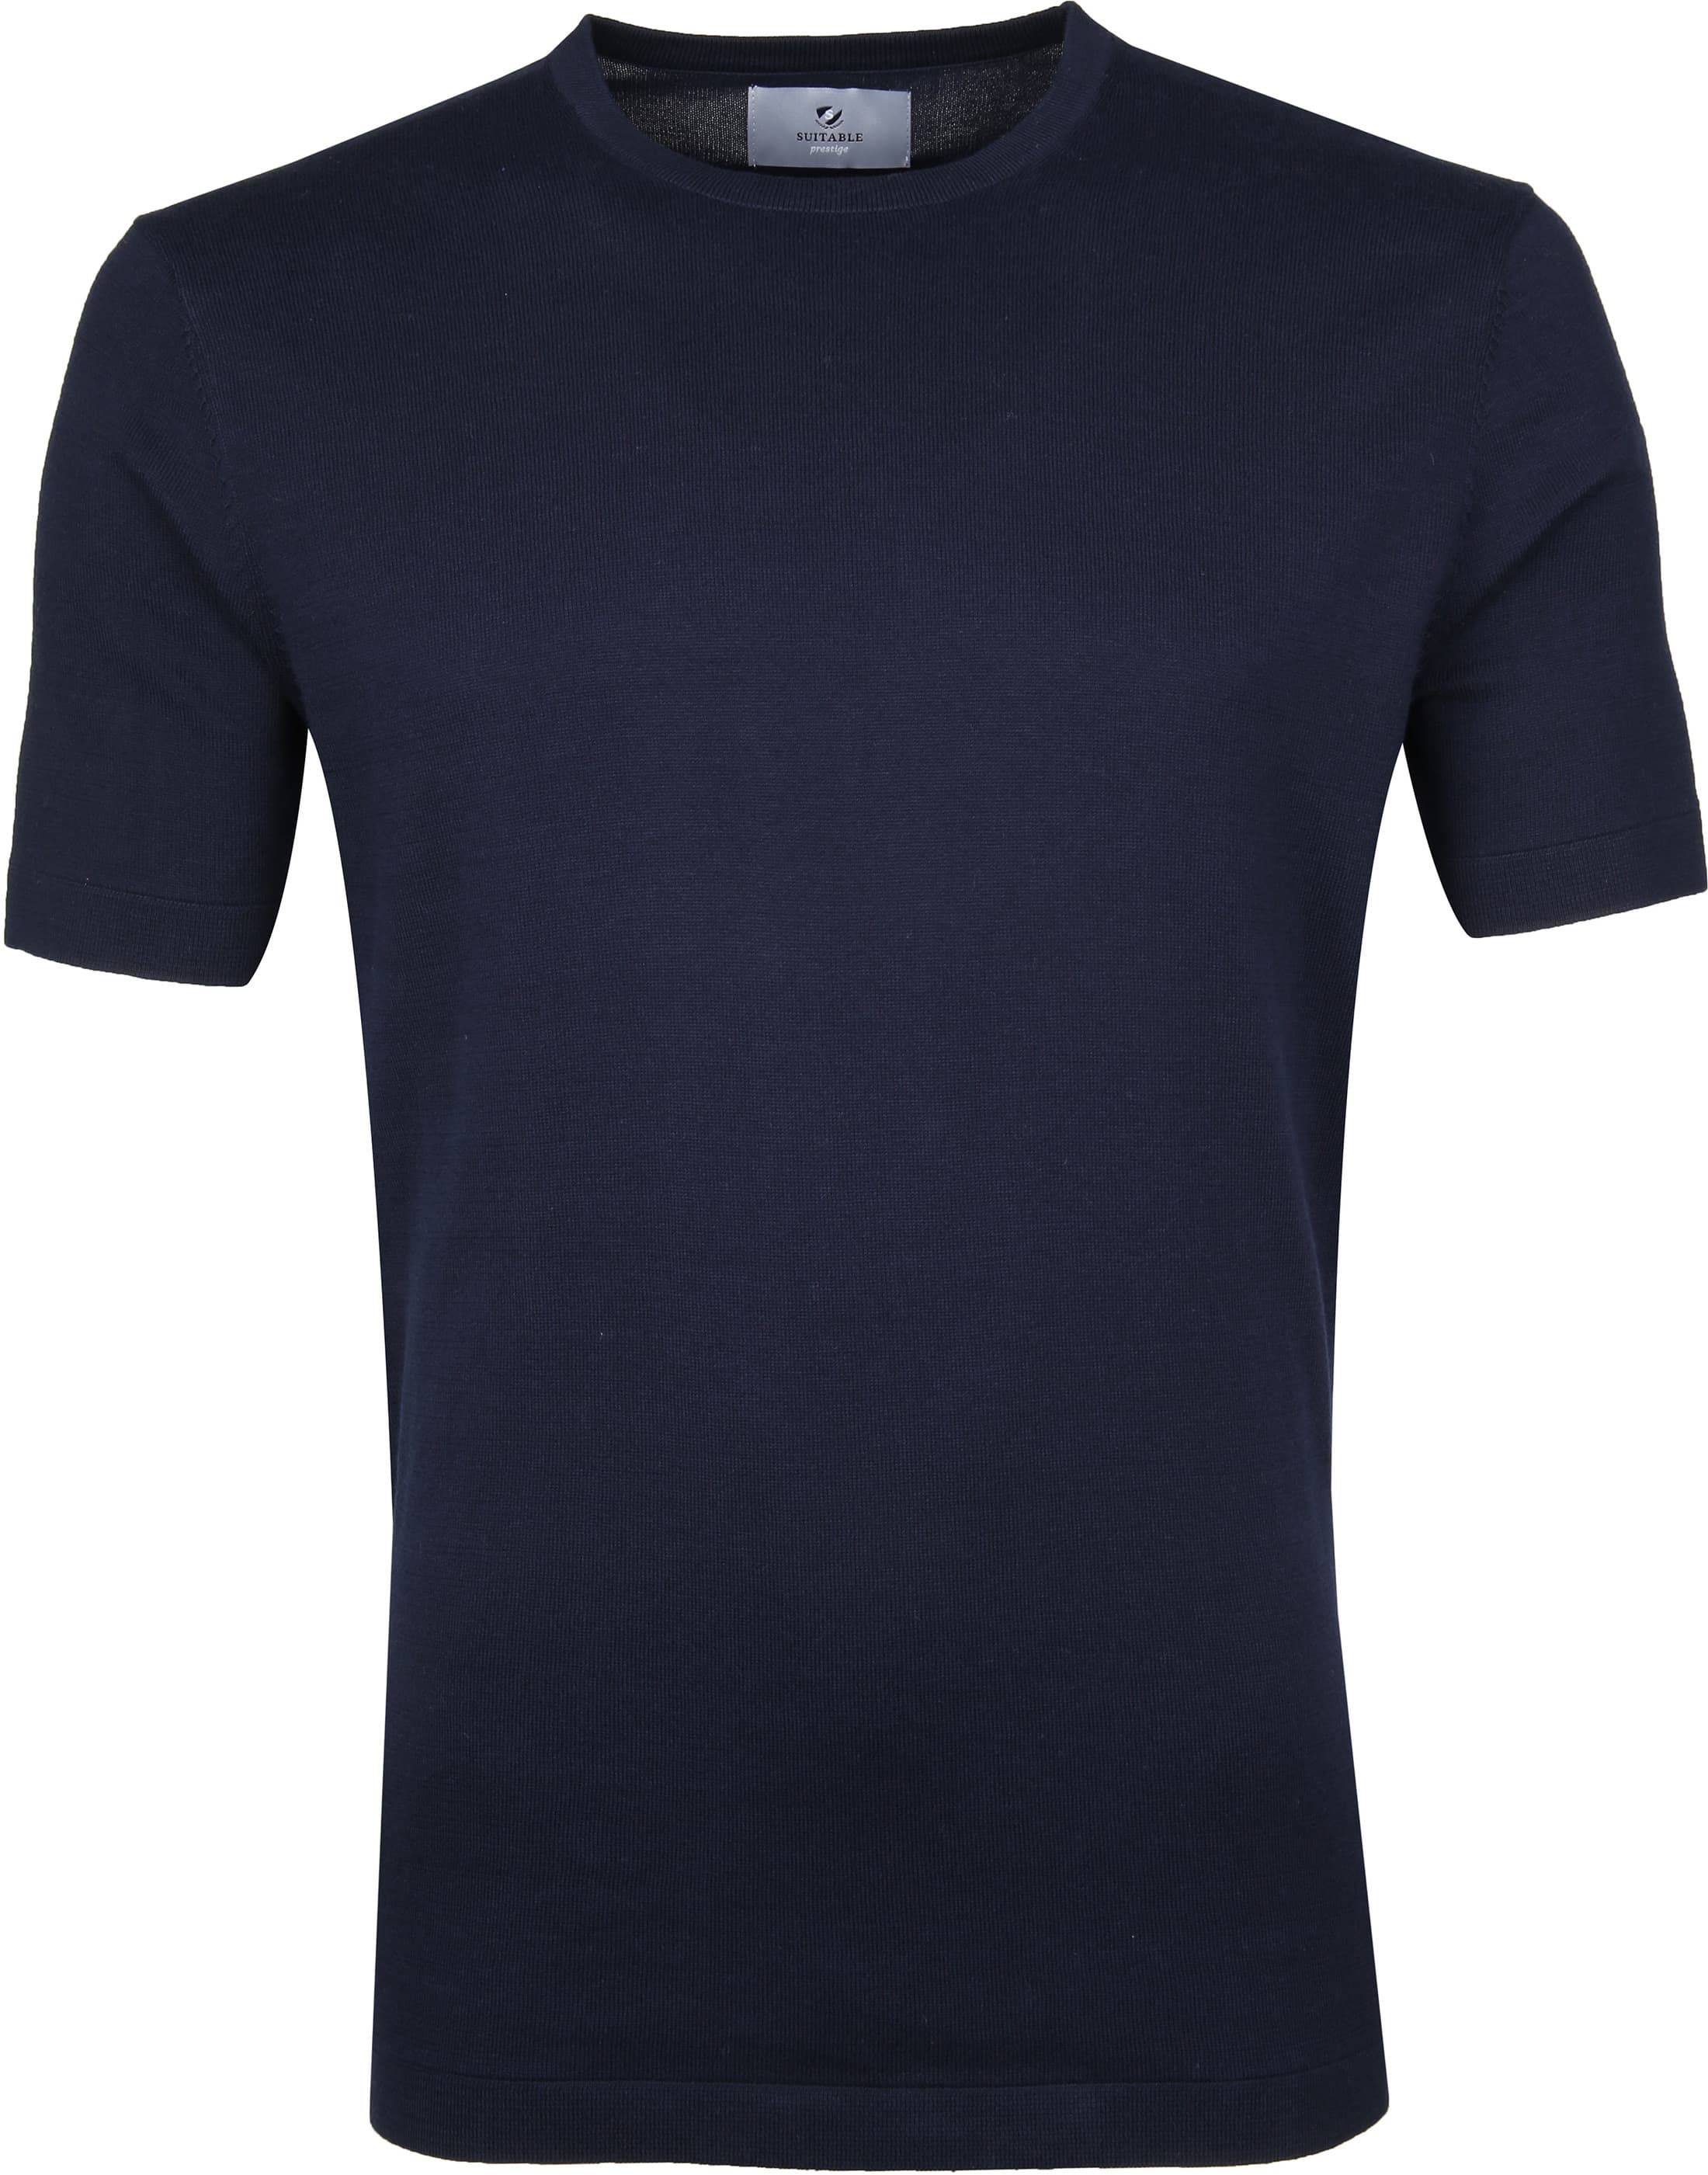 Suitable Prestige T-shirt Knitted Navy Dark Blue Blue size M